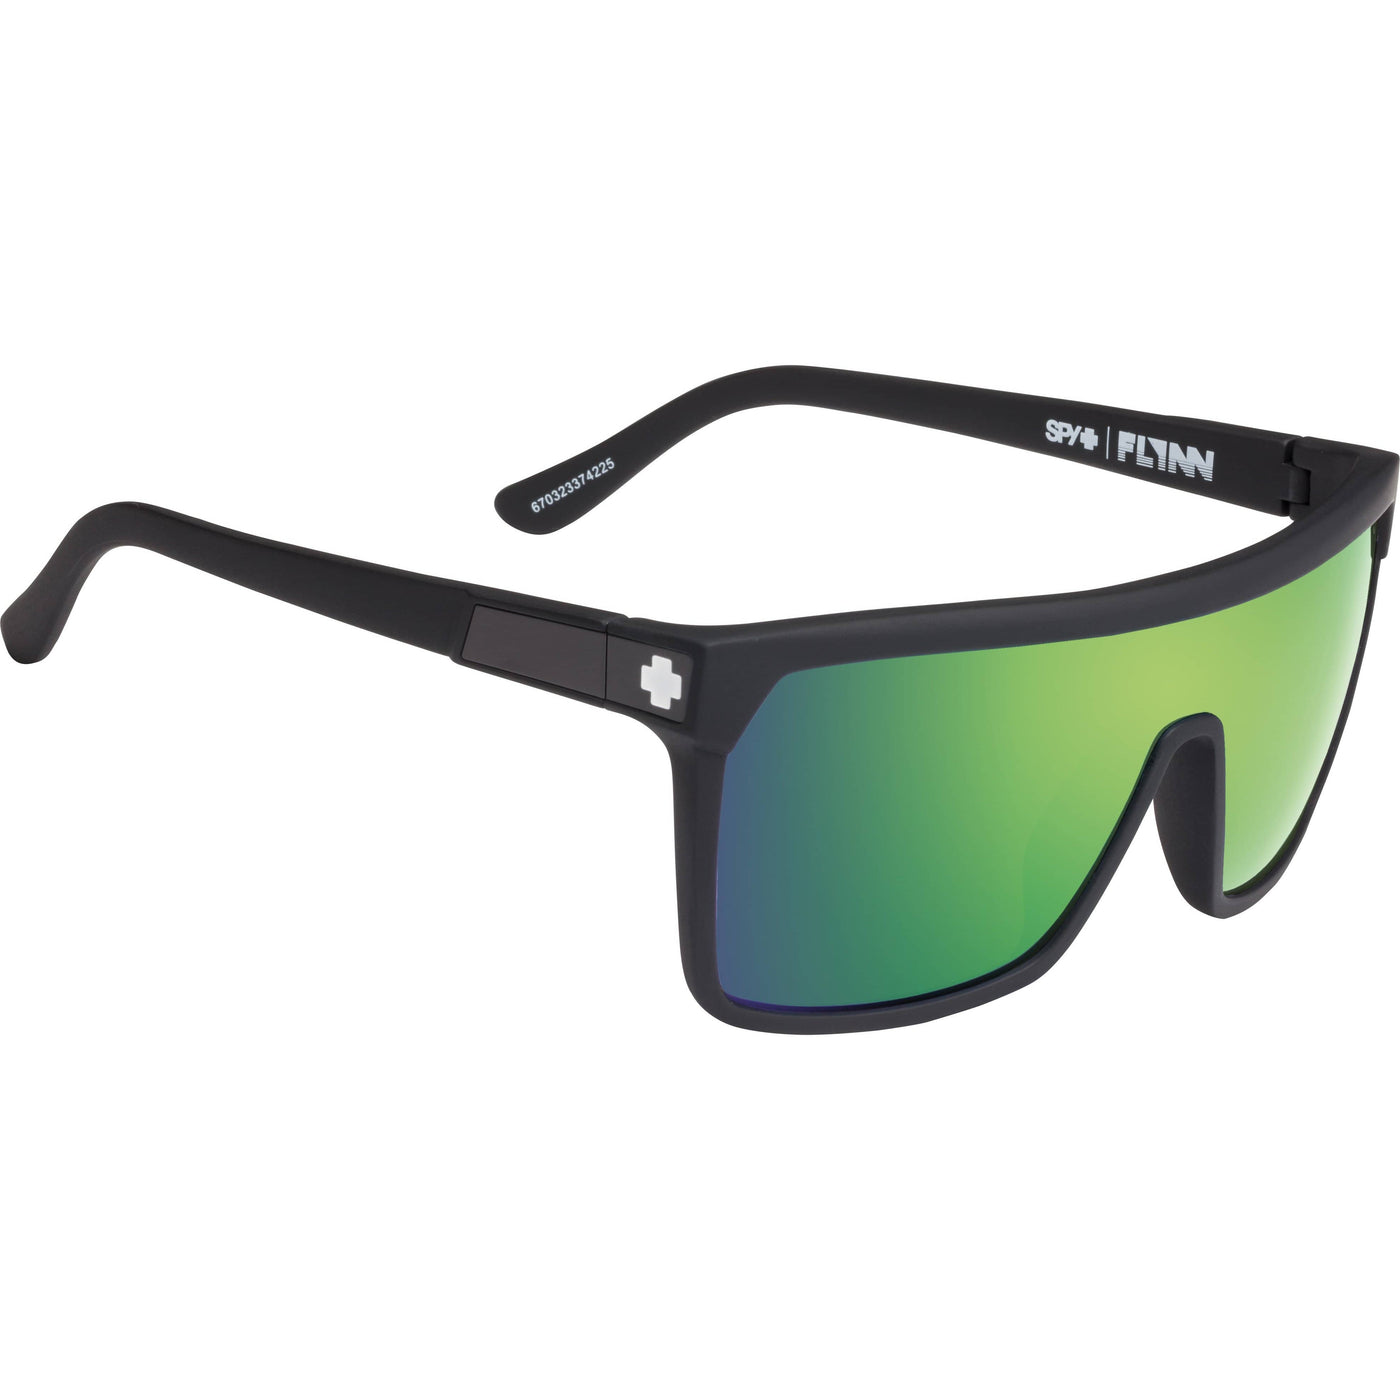 SPY Flynn Sunglasses, Happy Lens - Green 8Lines Shop - Fast Shipping